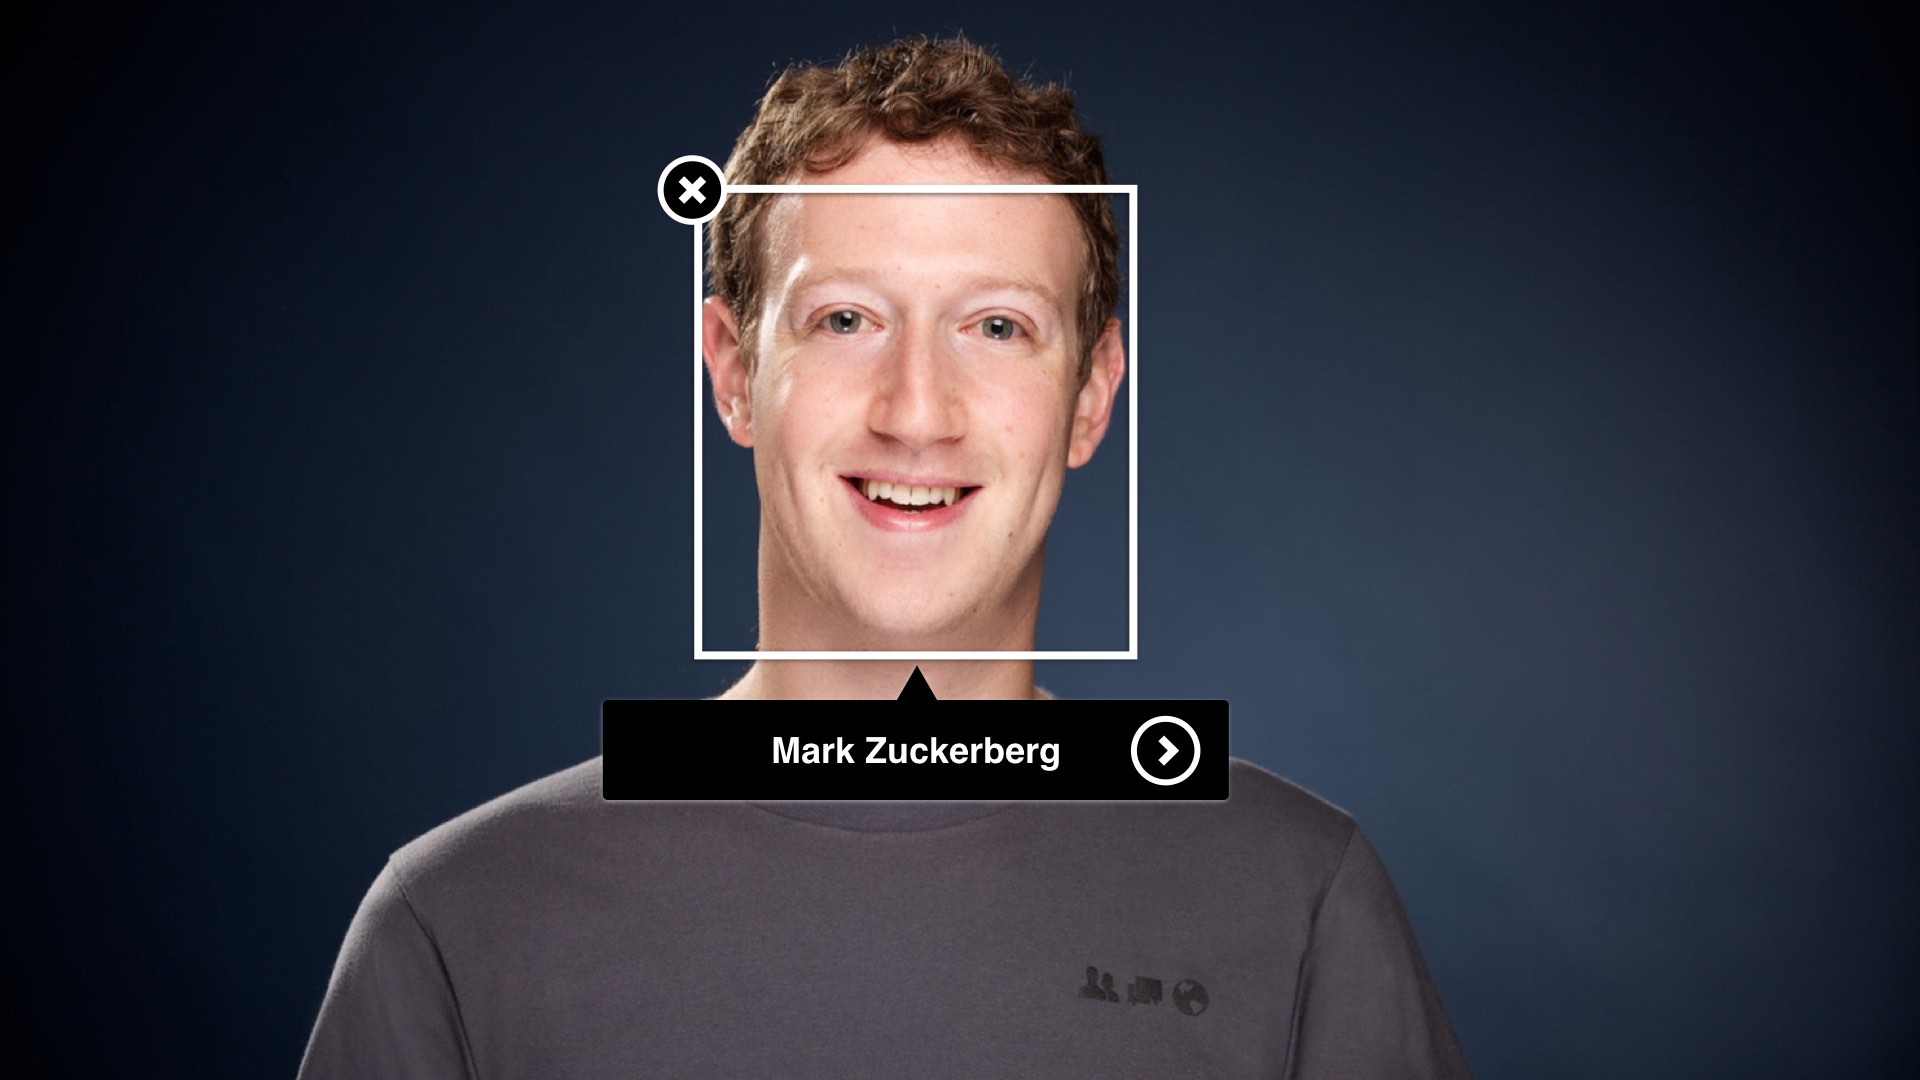 zuckerberg-face-recognition